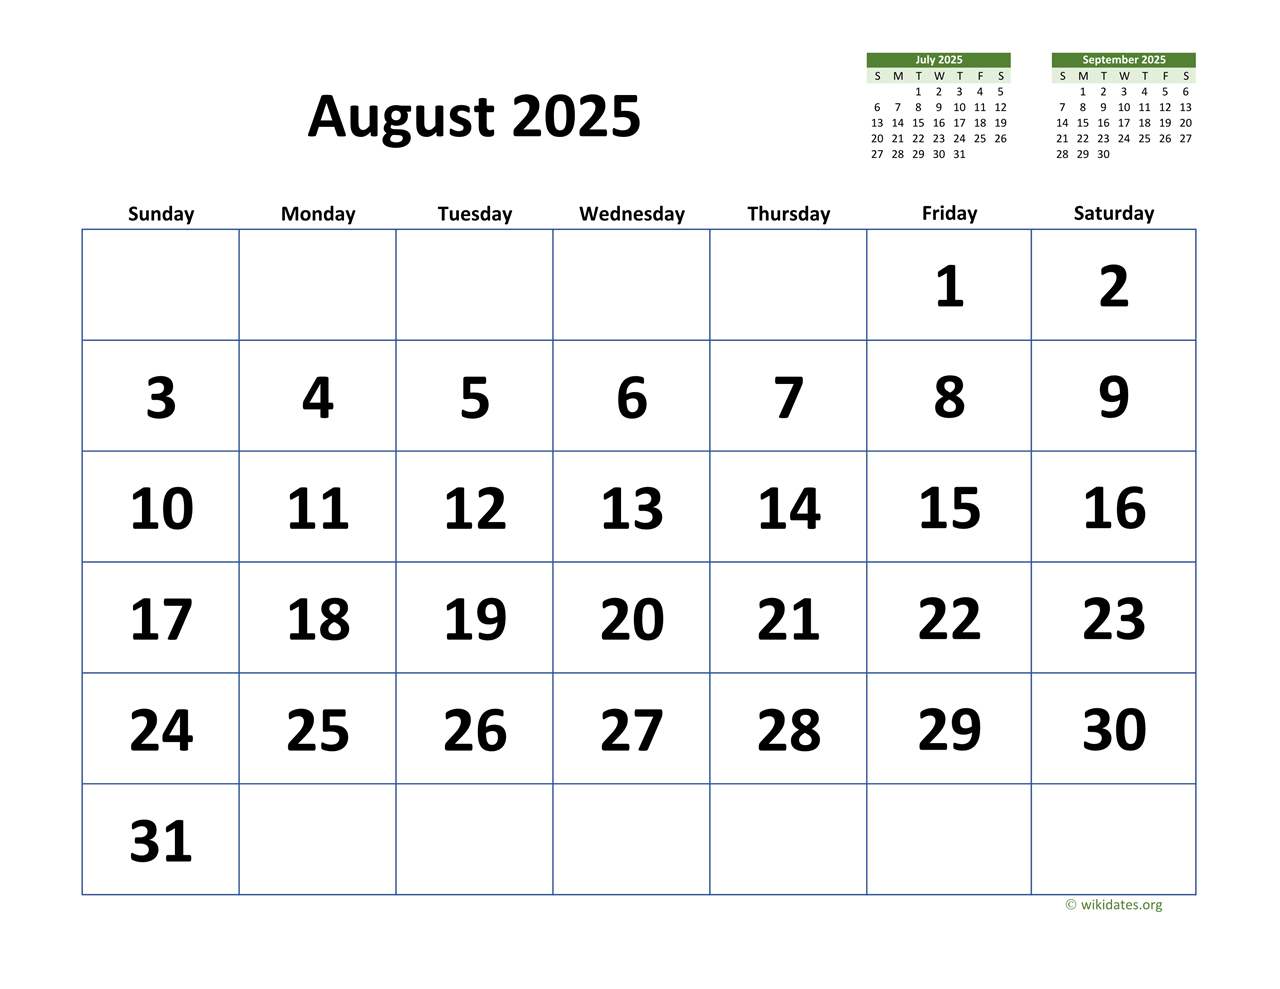 August 2025 Hindu Calendar 